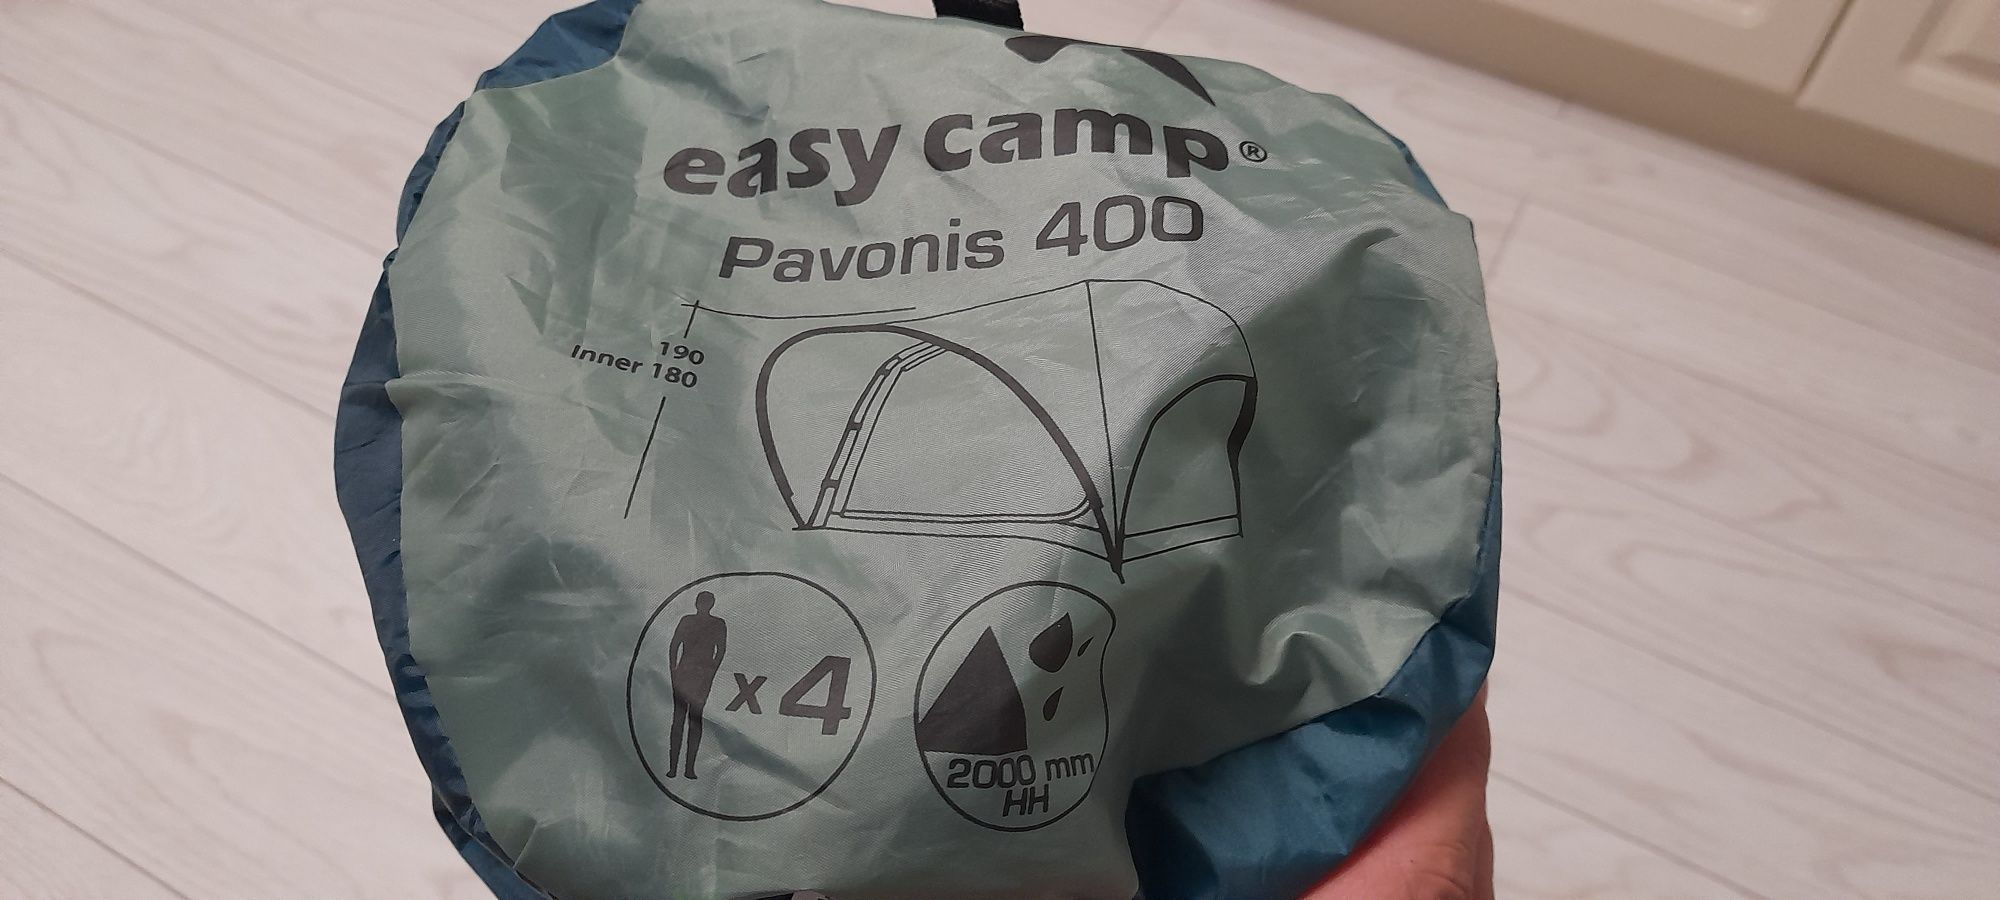 Cort easycamp pavonis400 nou